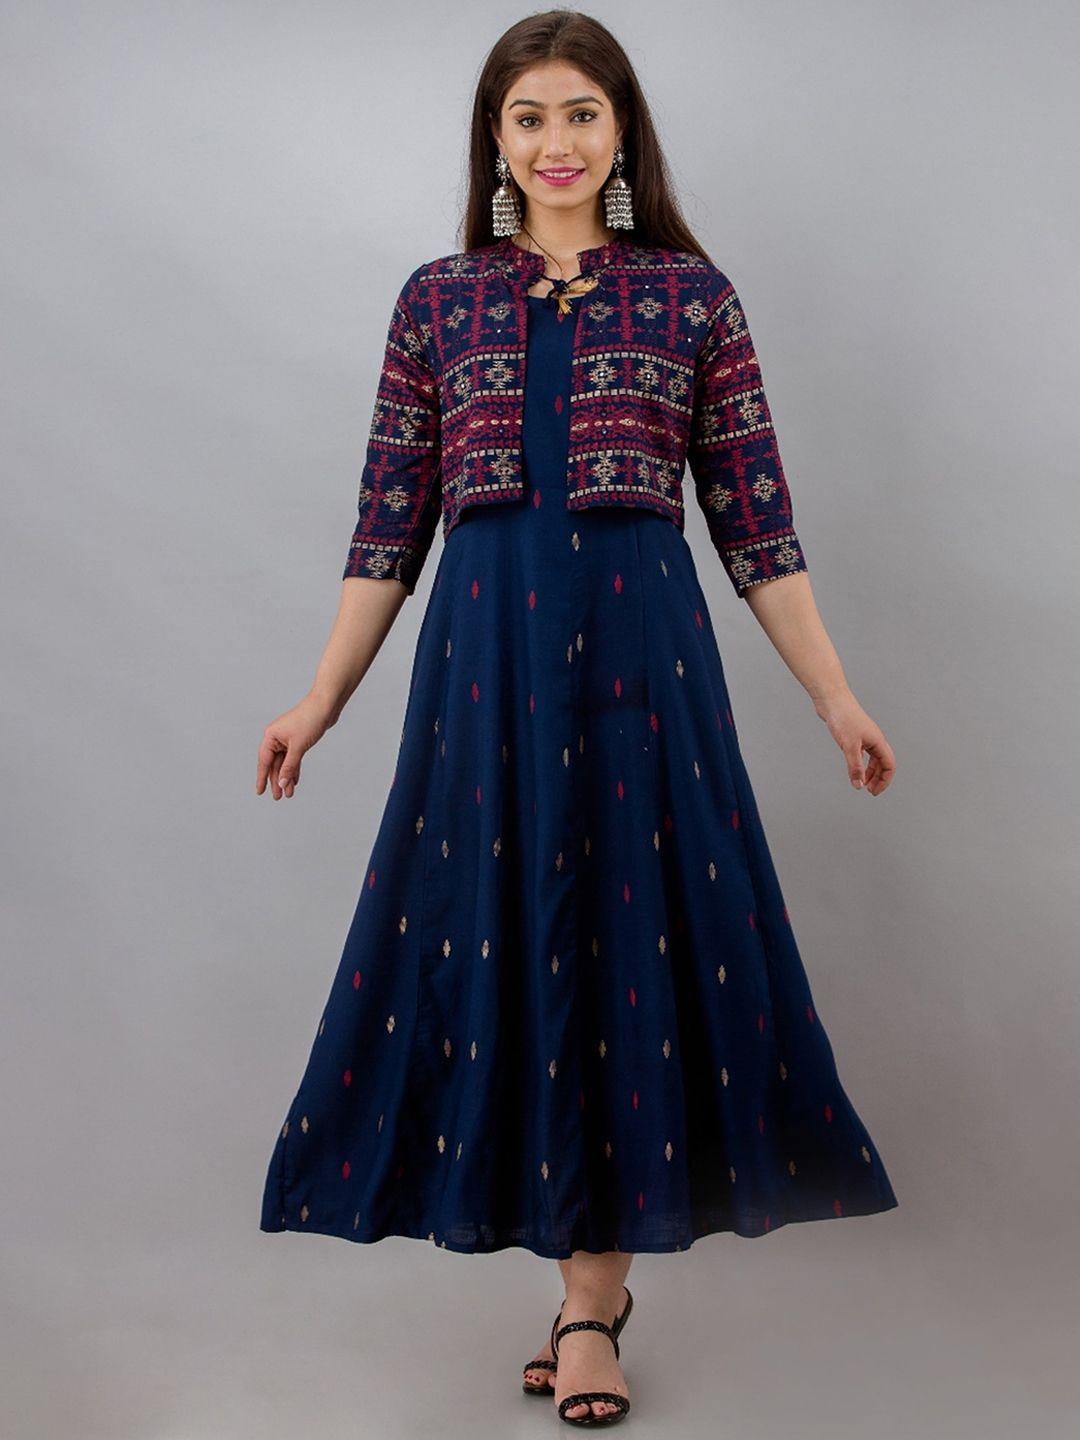 misbis ethnic motifs printed sleeveless ethnic dress with ethnic jacket